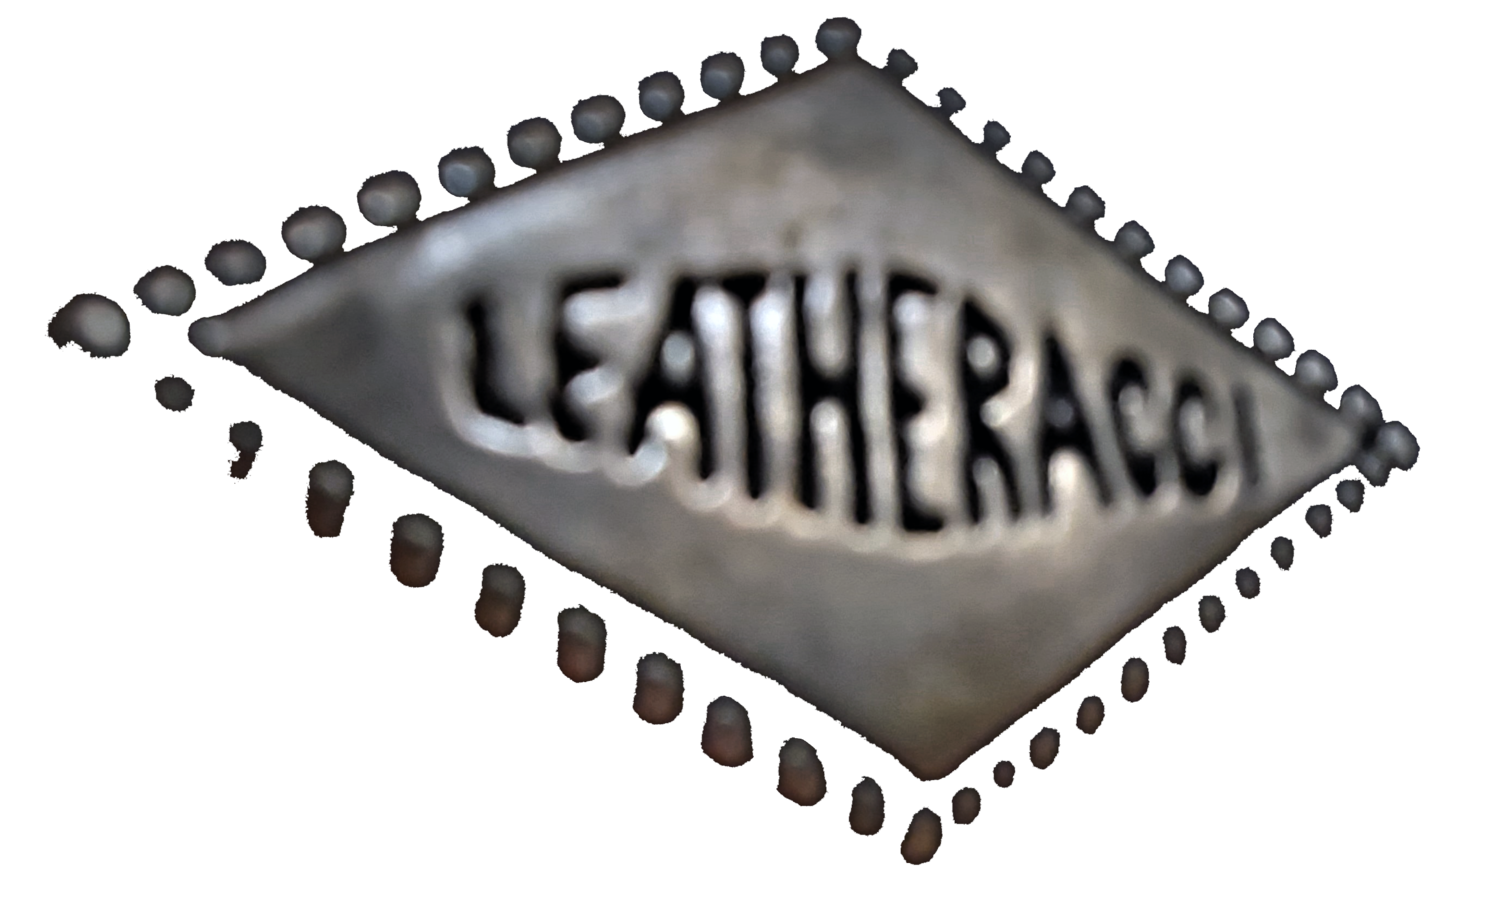 Leatheracci